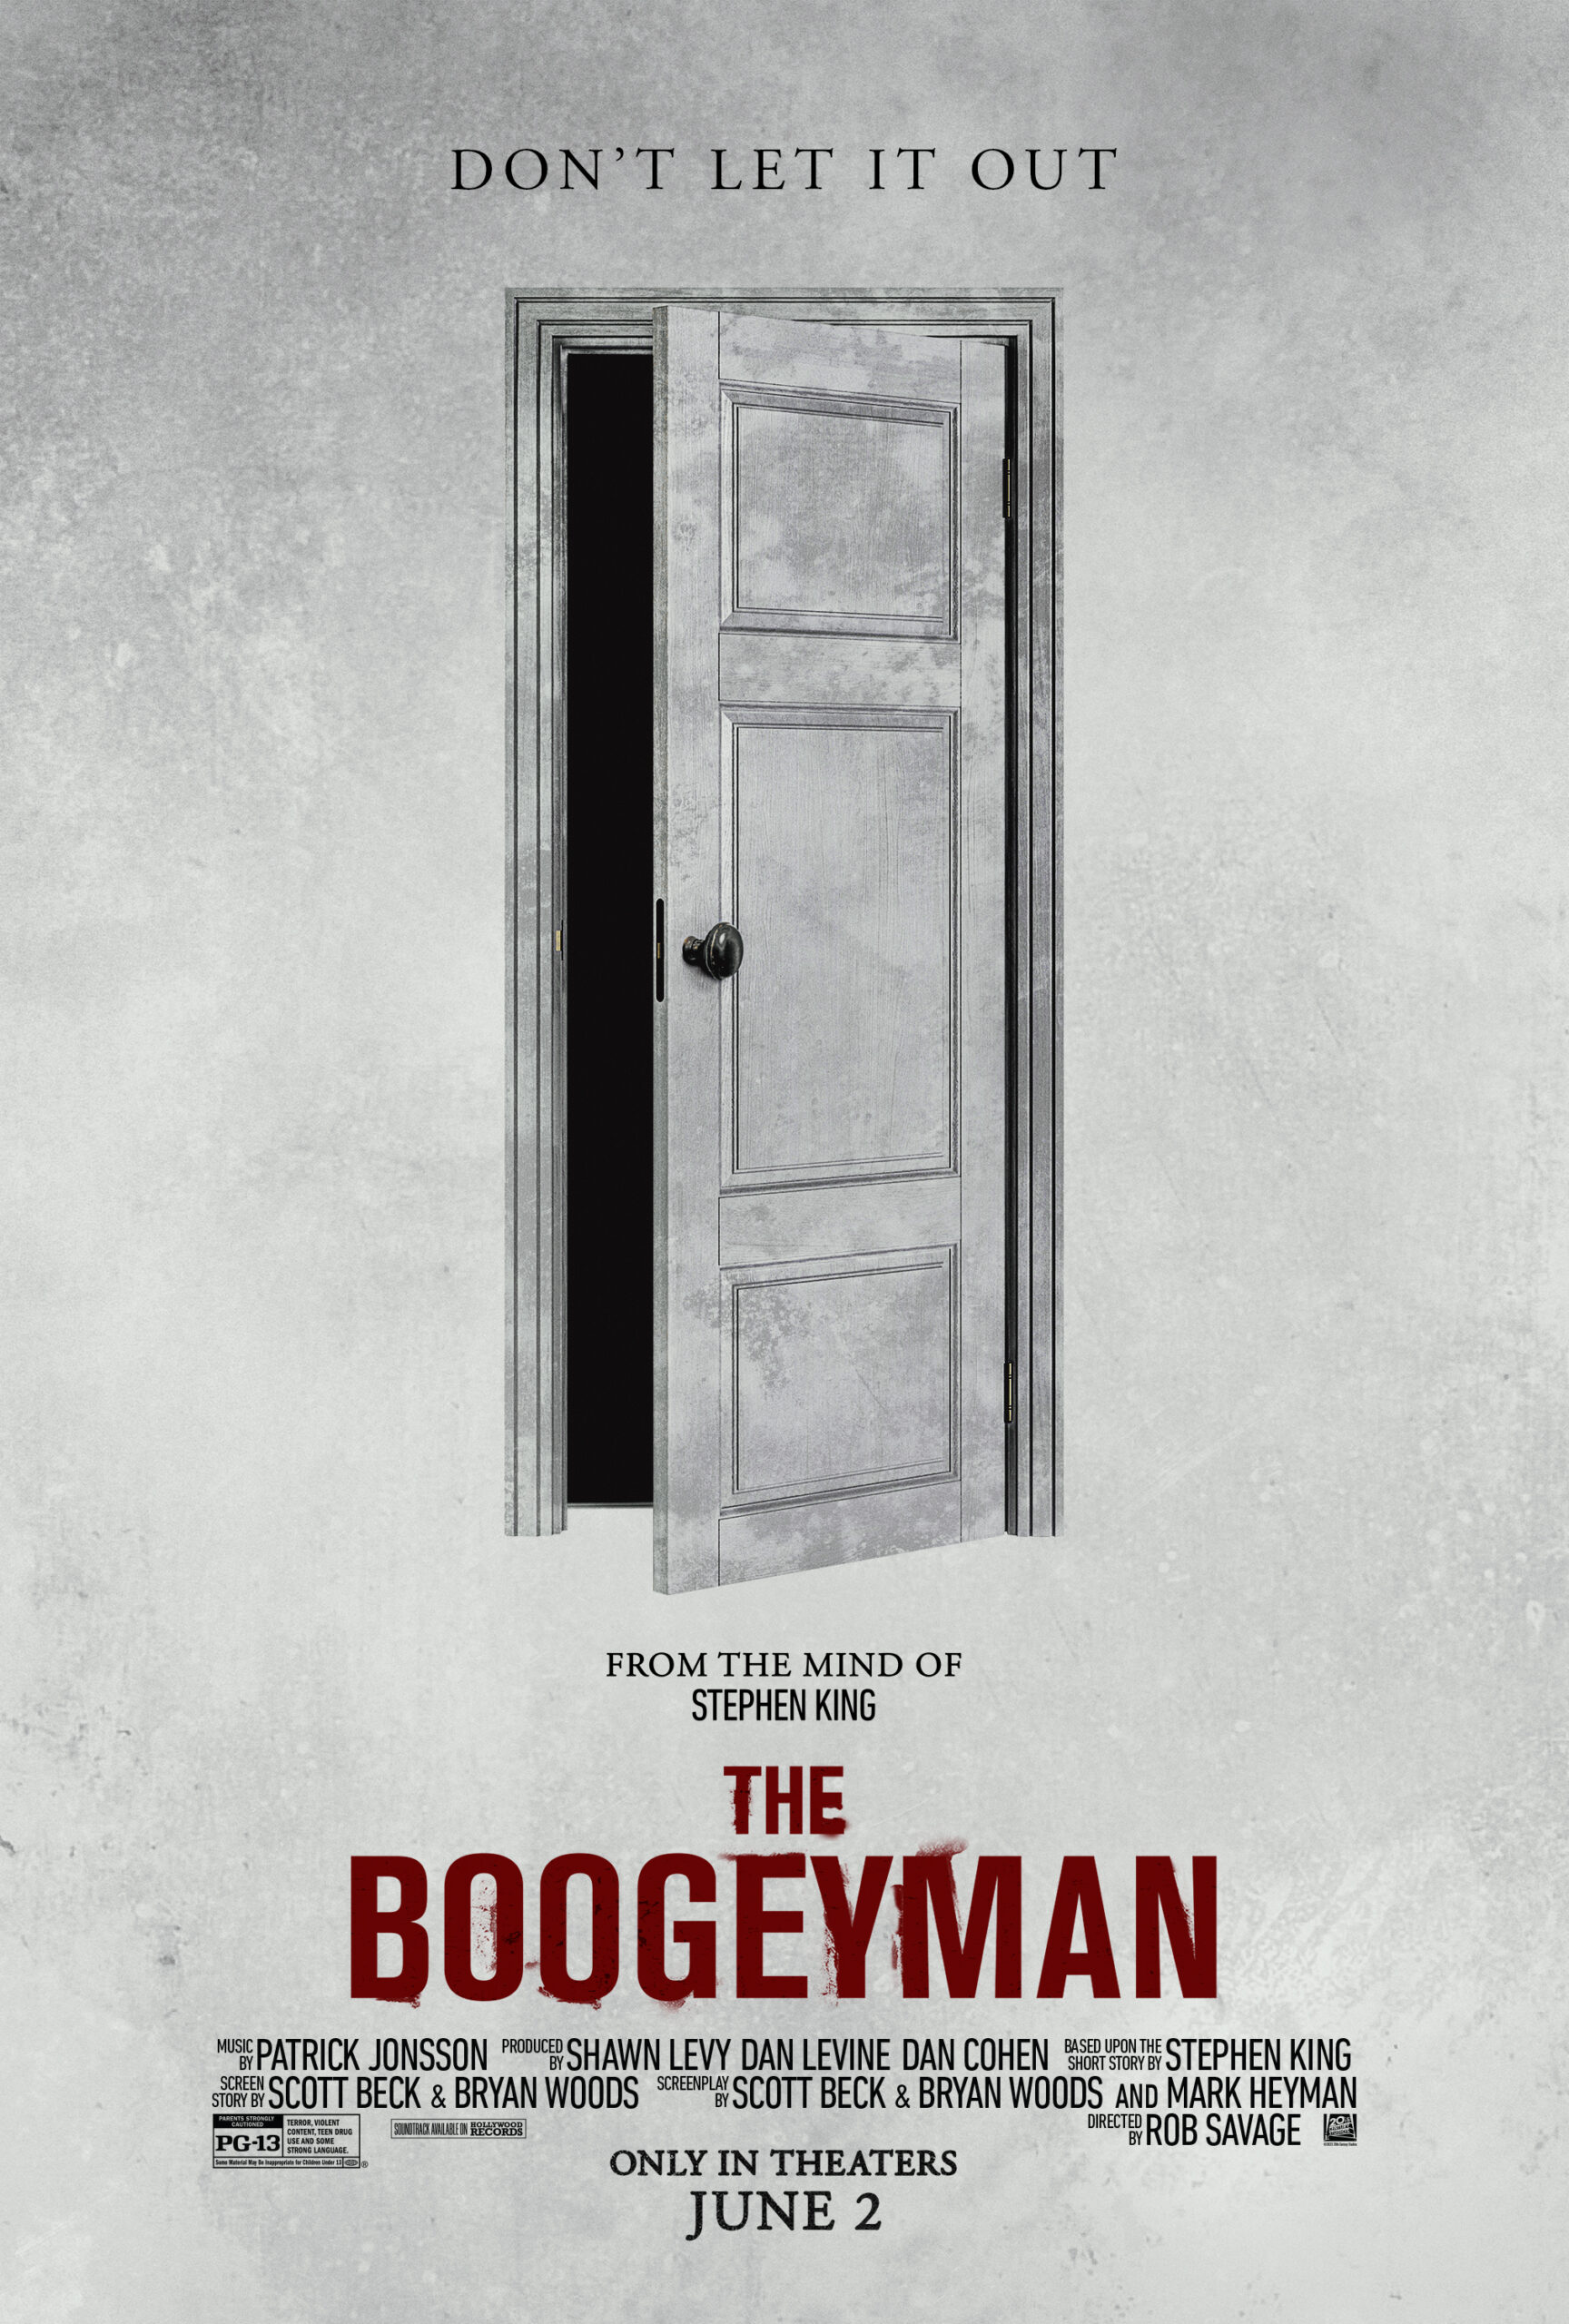 The Boogeyman: trailer, locandina e data di uscita italiani